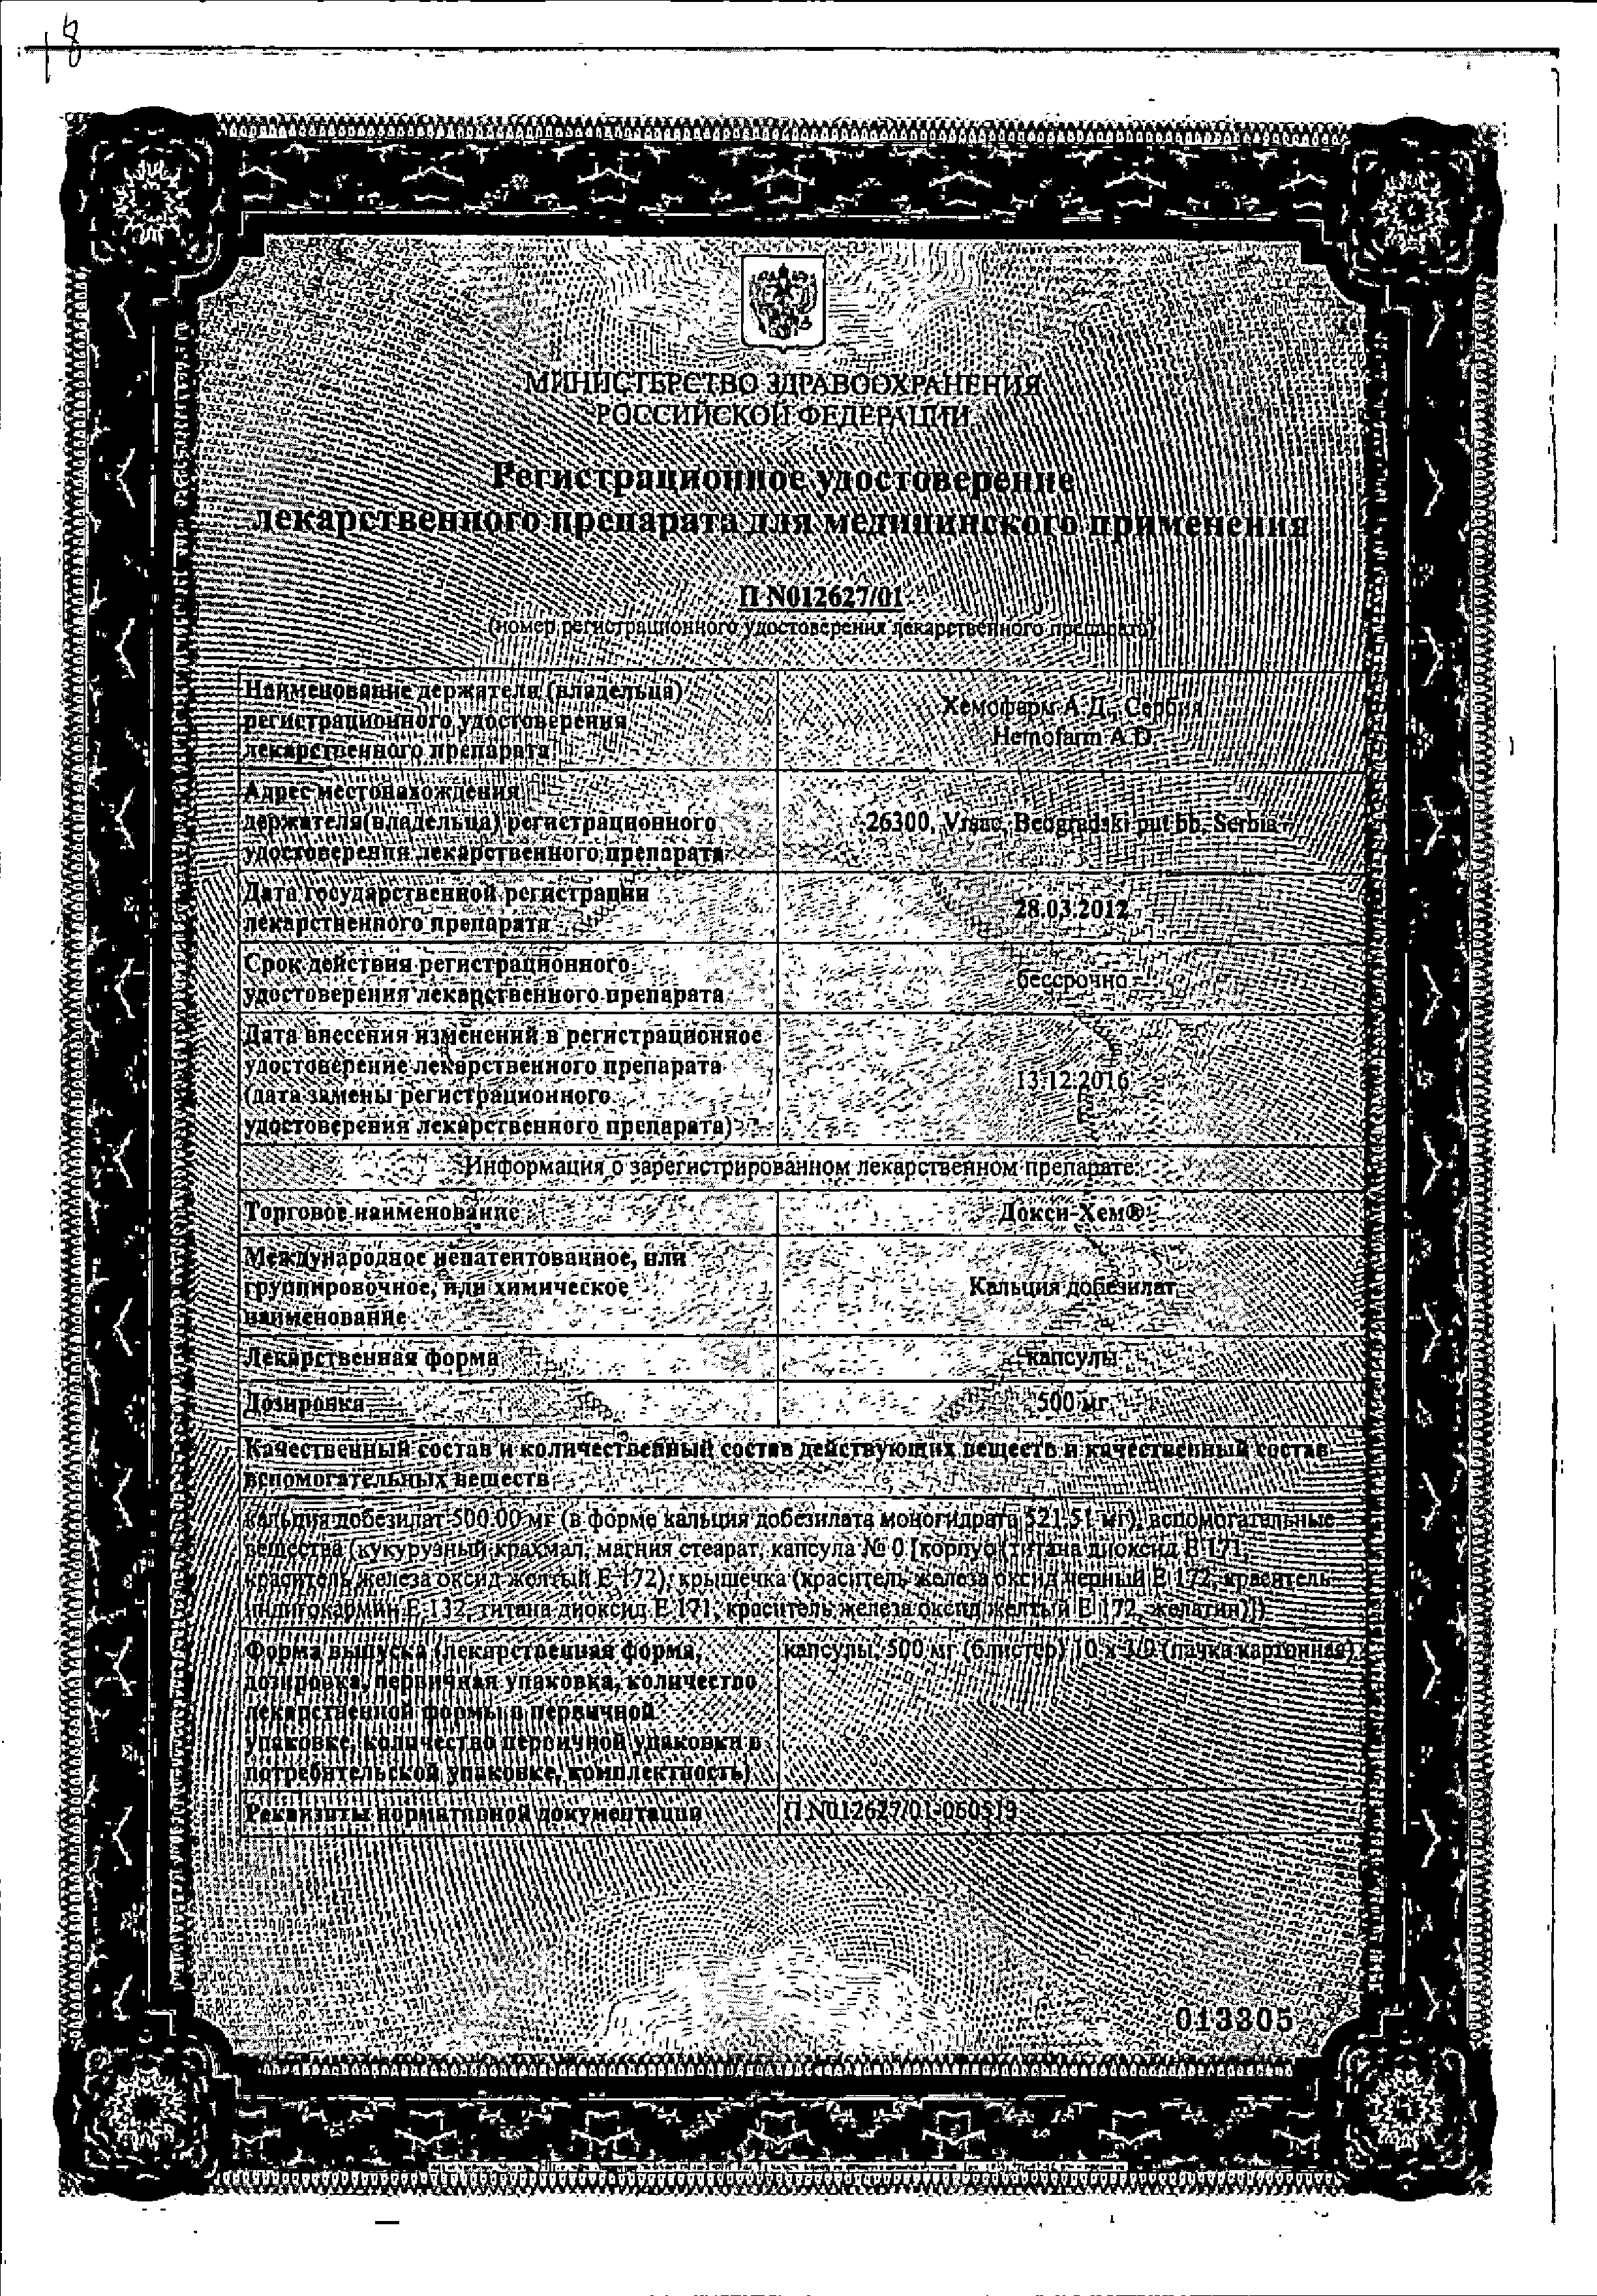 Докси-Хем сертификат